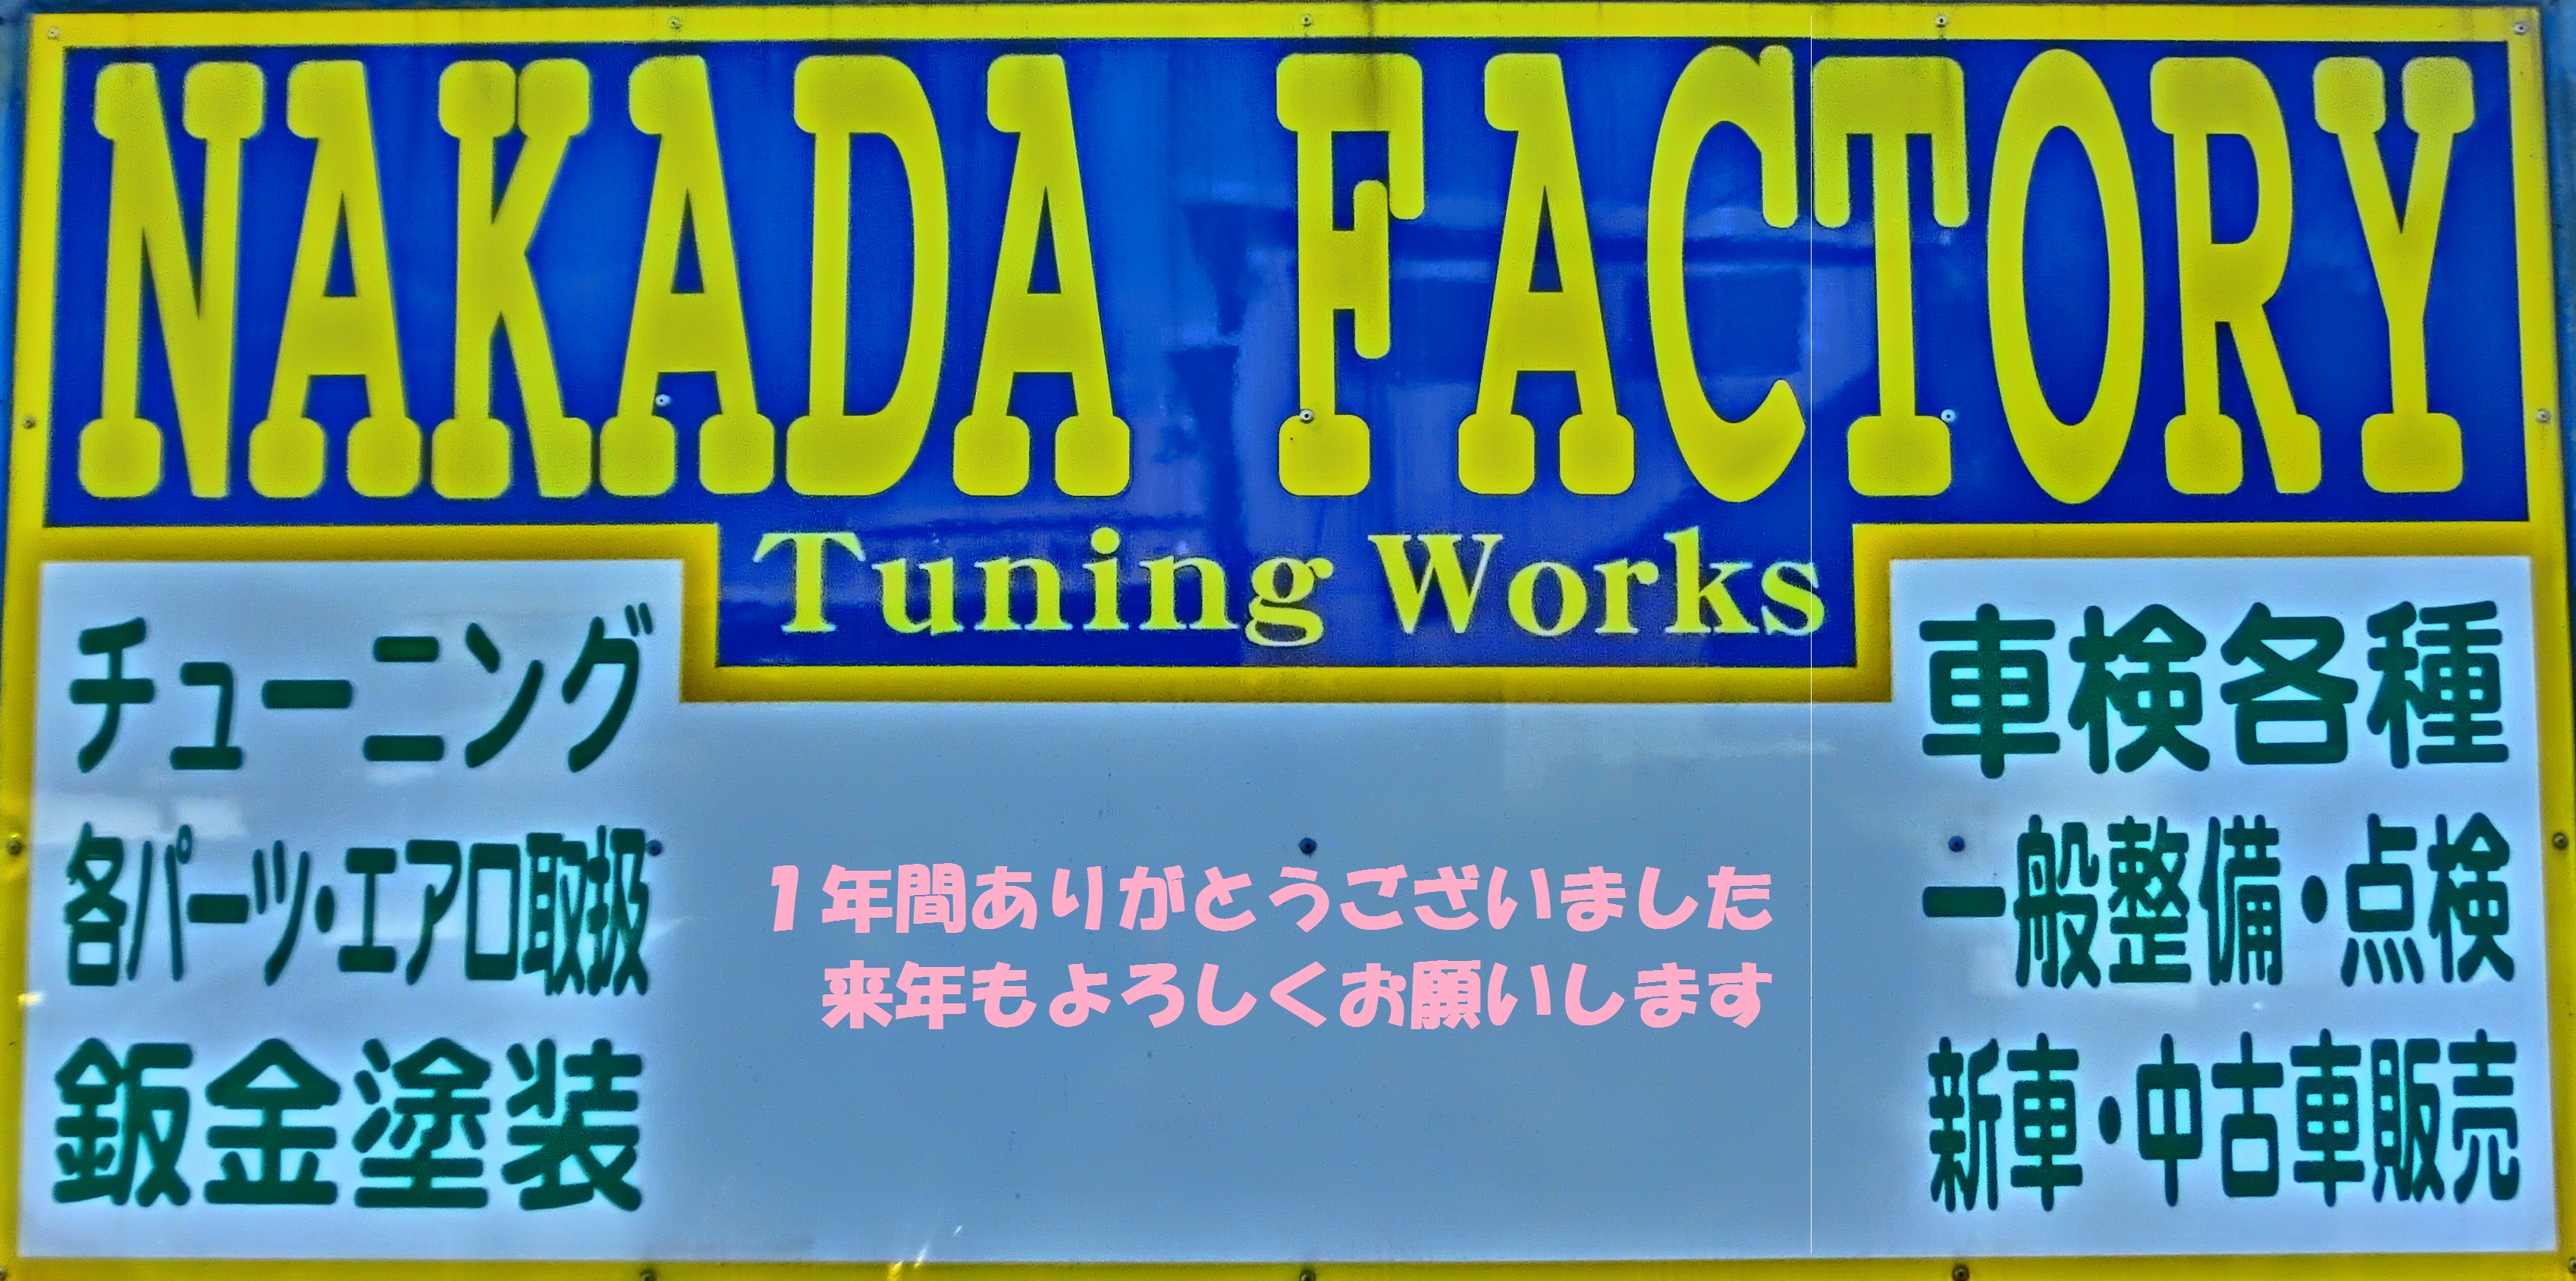 http://www.nakada-factory.com/news/CIMG2433.JPG